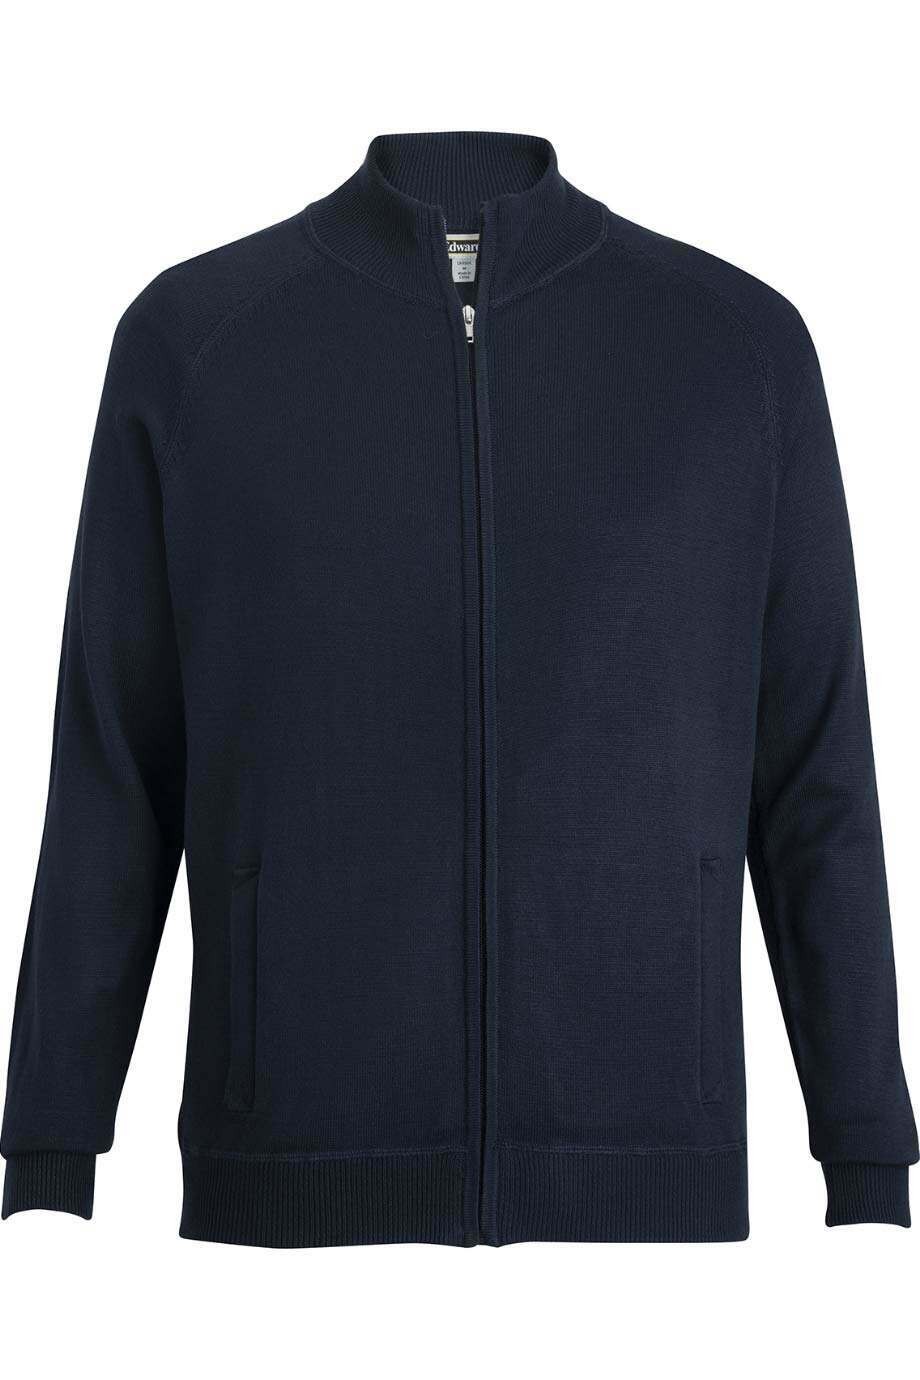 Edwards Full Zip Sweater Jacket with Pockets